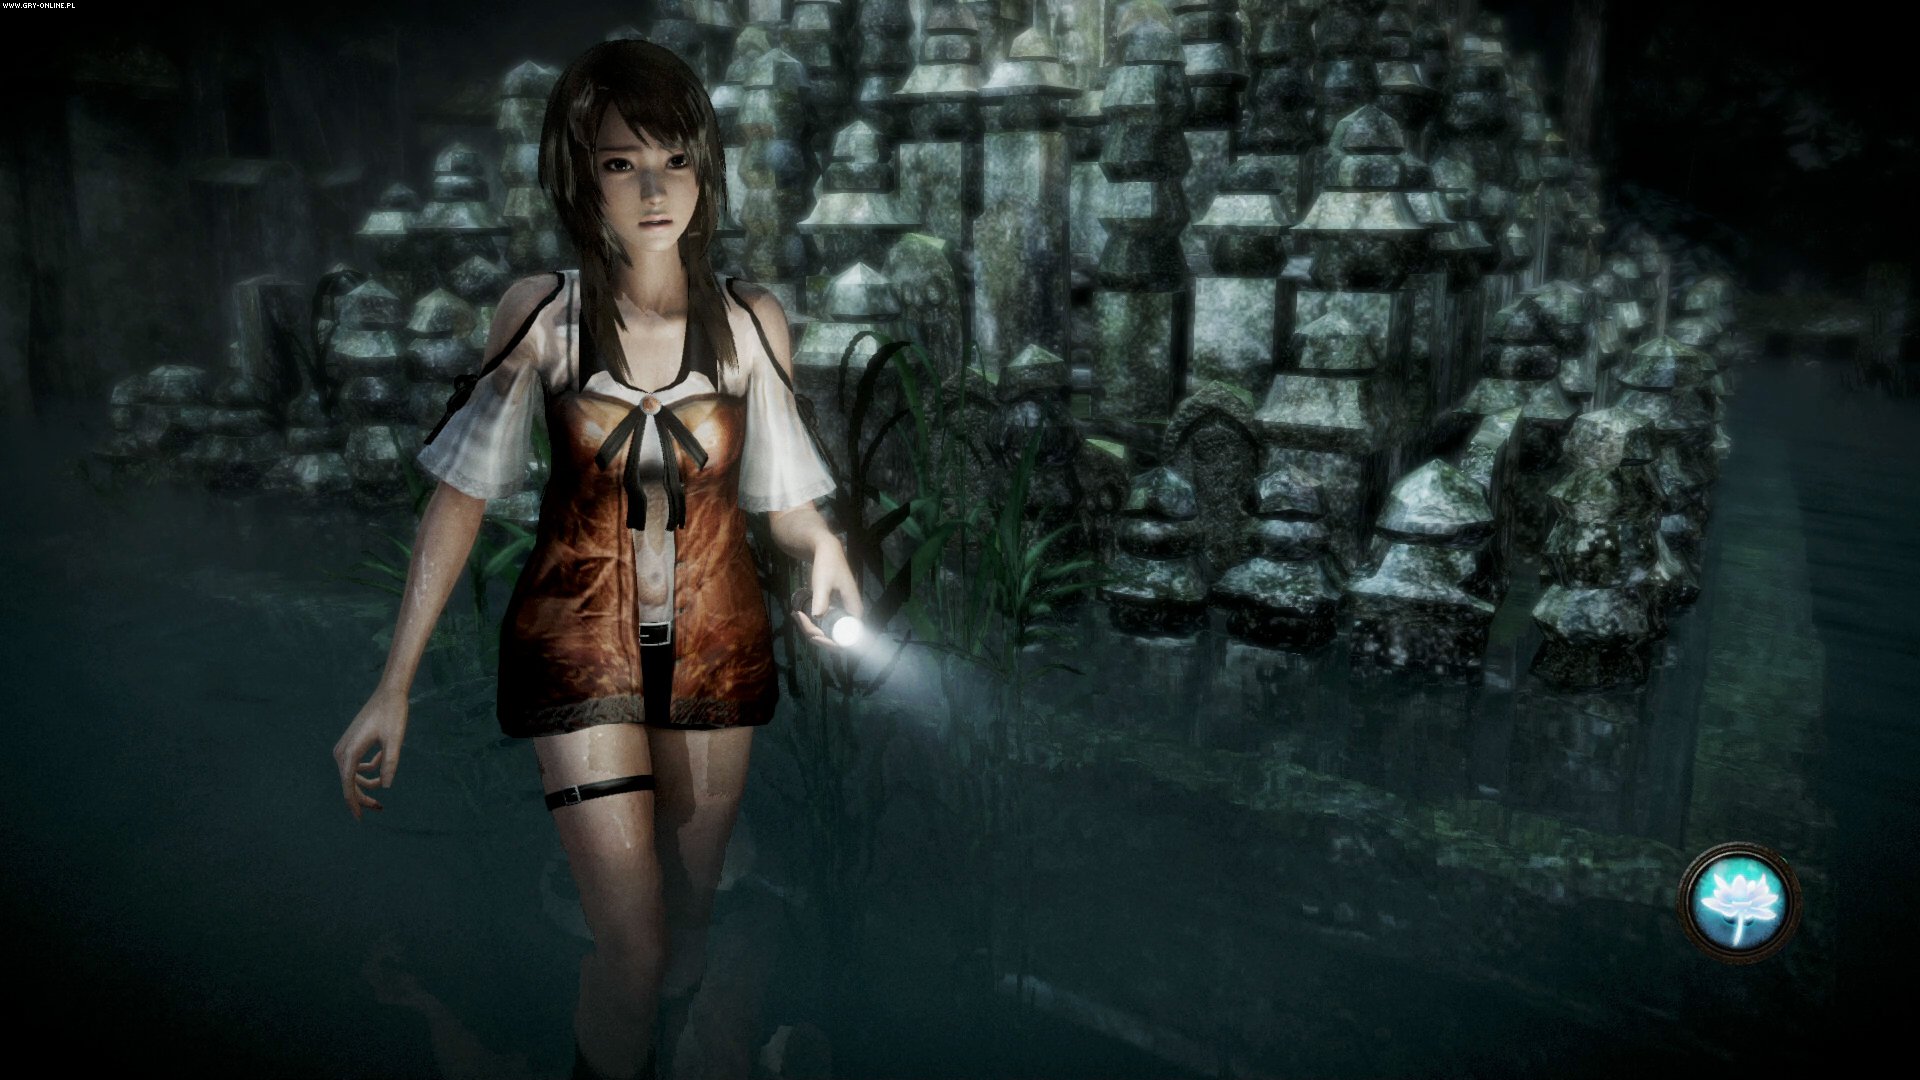 Fatal Frame Maiden of Black Water Review: Медленный, впечатляющий ожог - картинка # 3